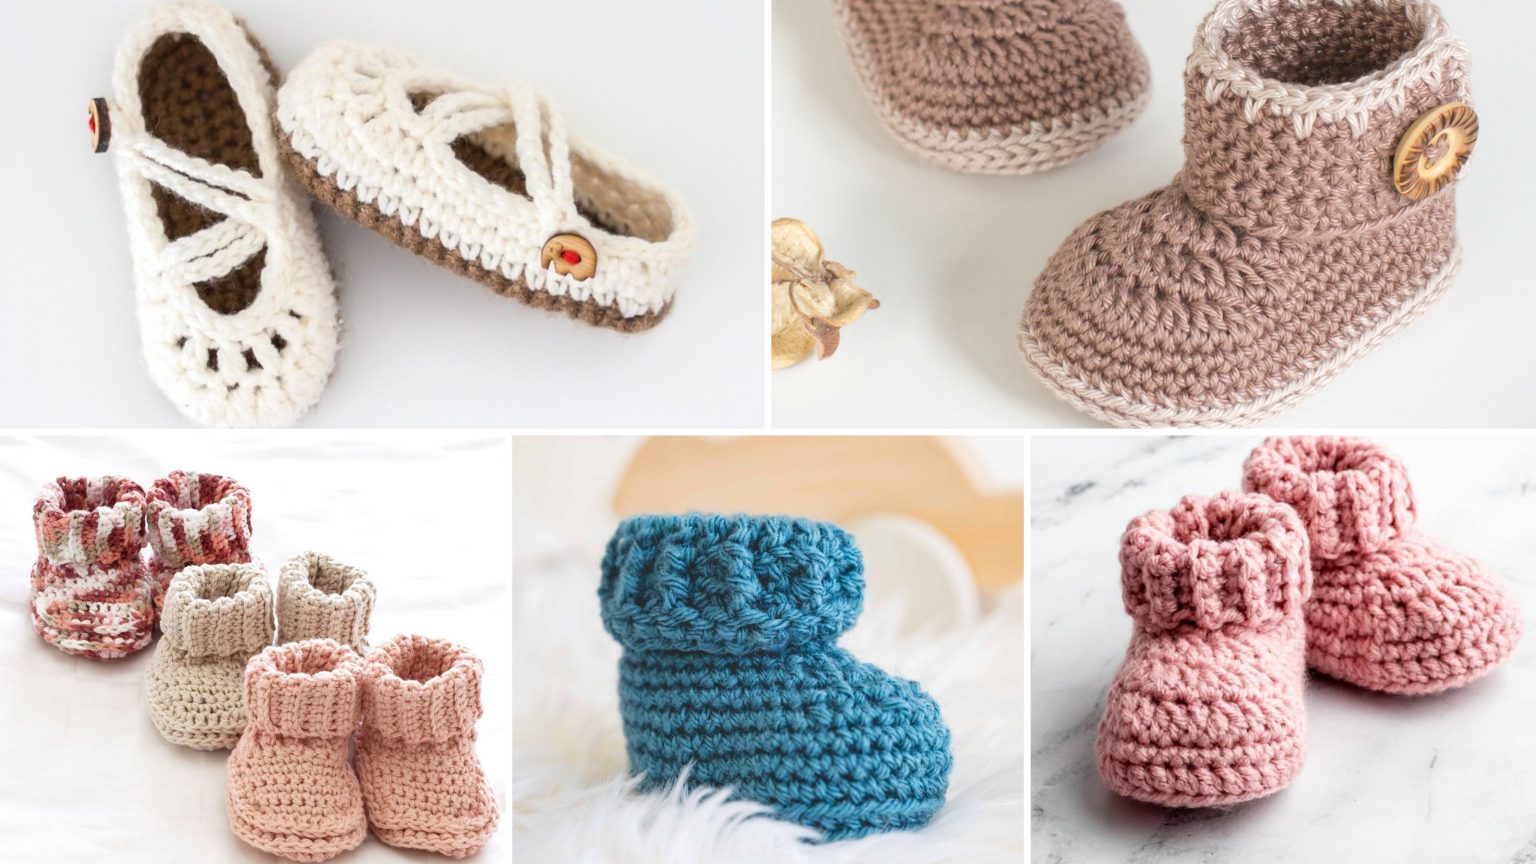 Classic Crochet Patterns for Baby Booties - EasyCrochet.com